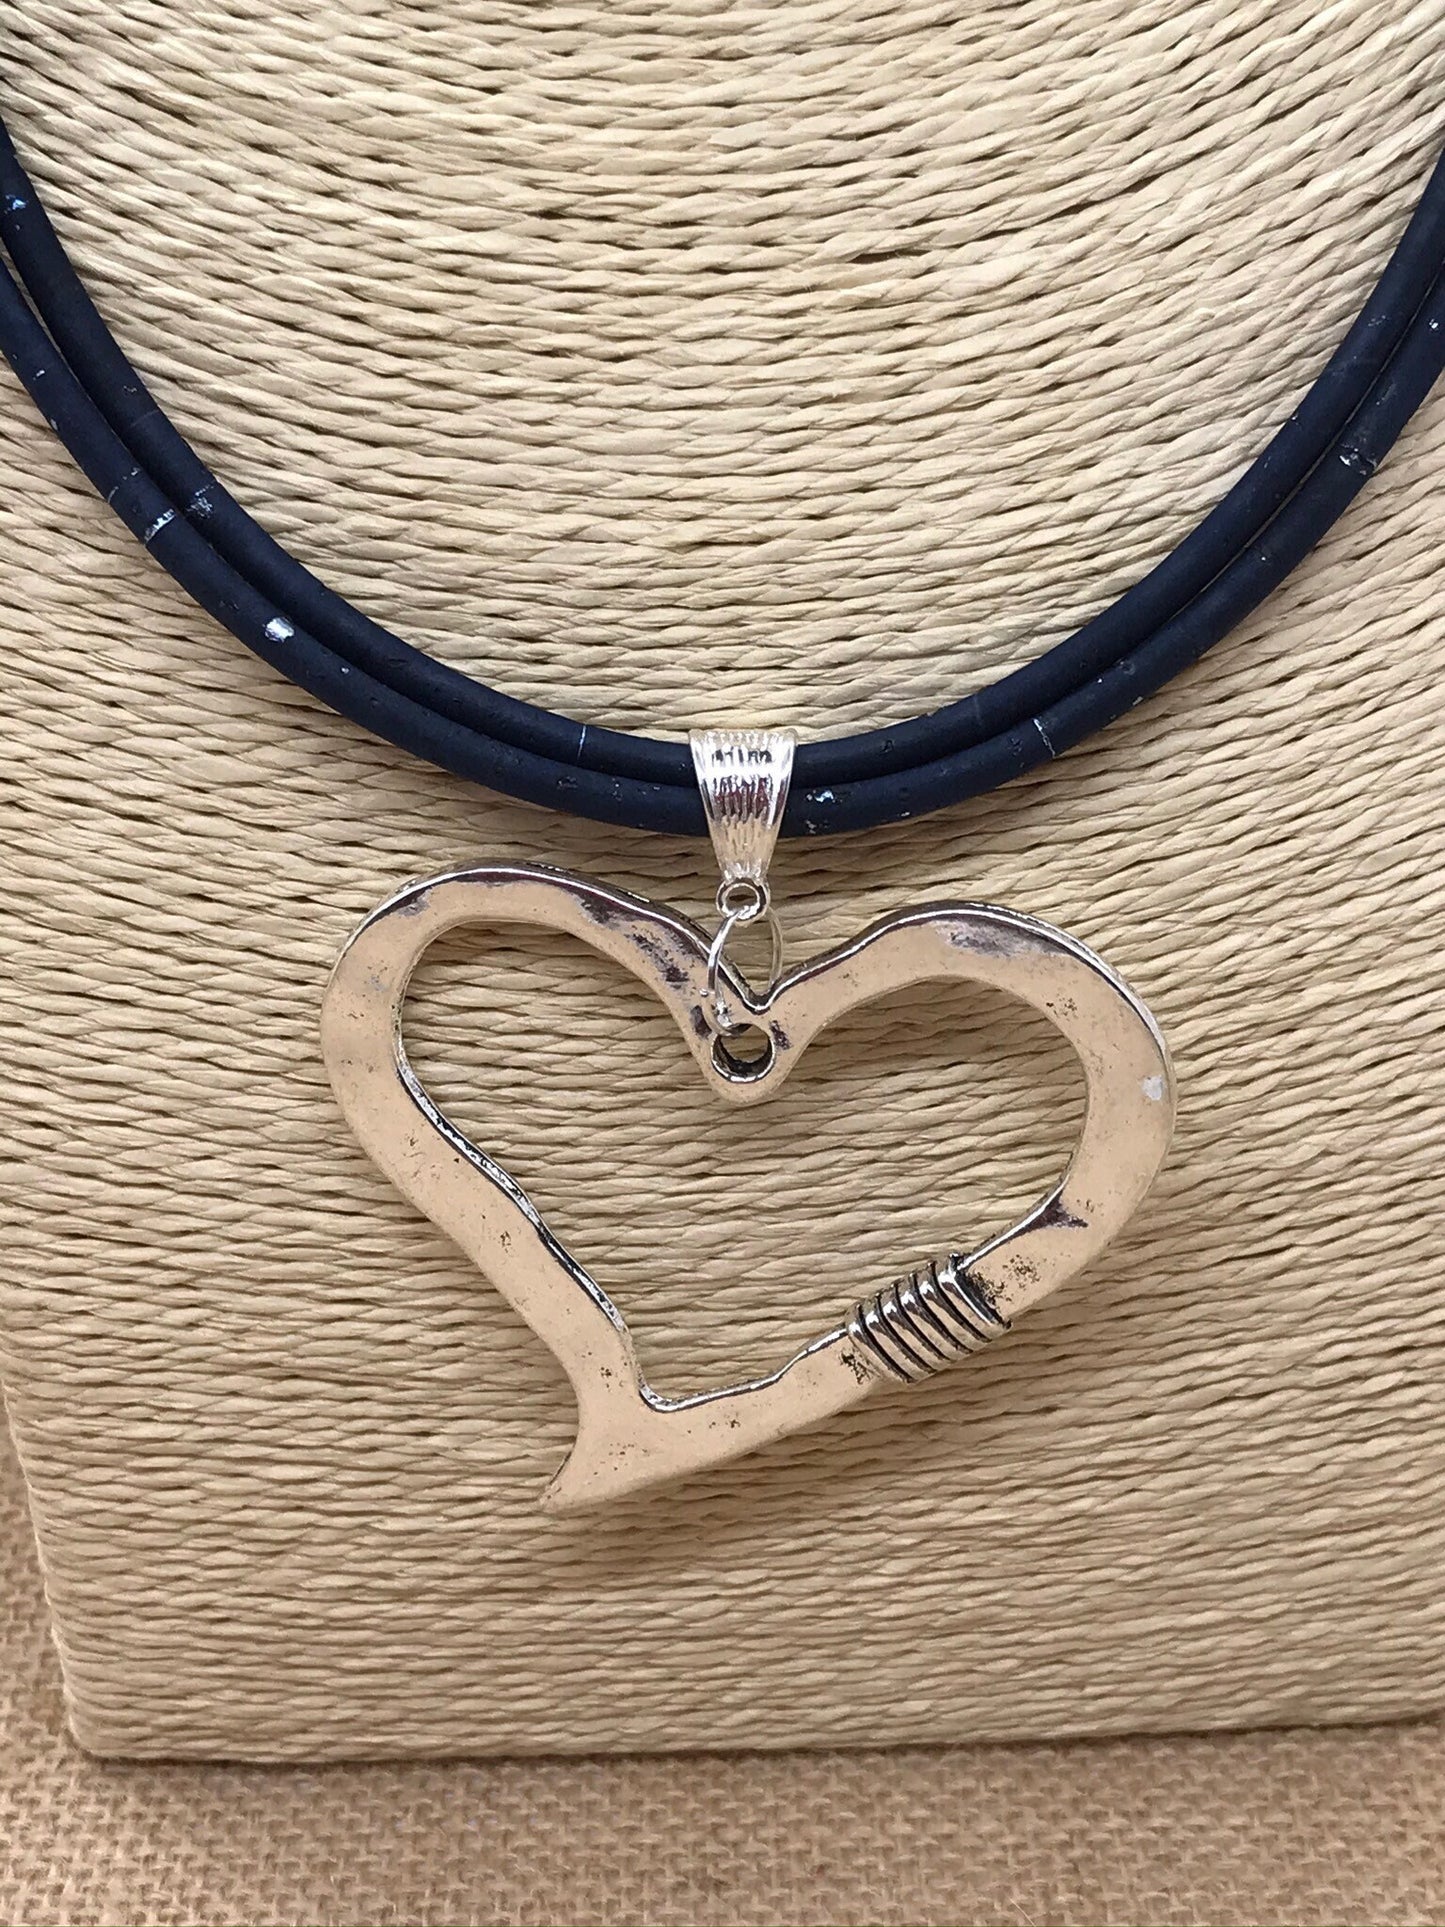 Handmade Cork Necklace with Heart Pendant Vegan